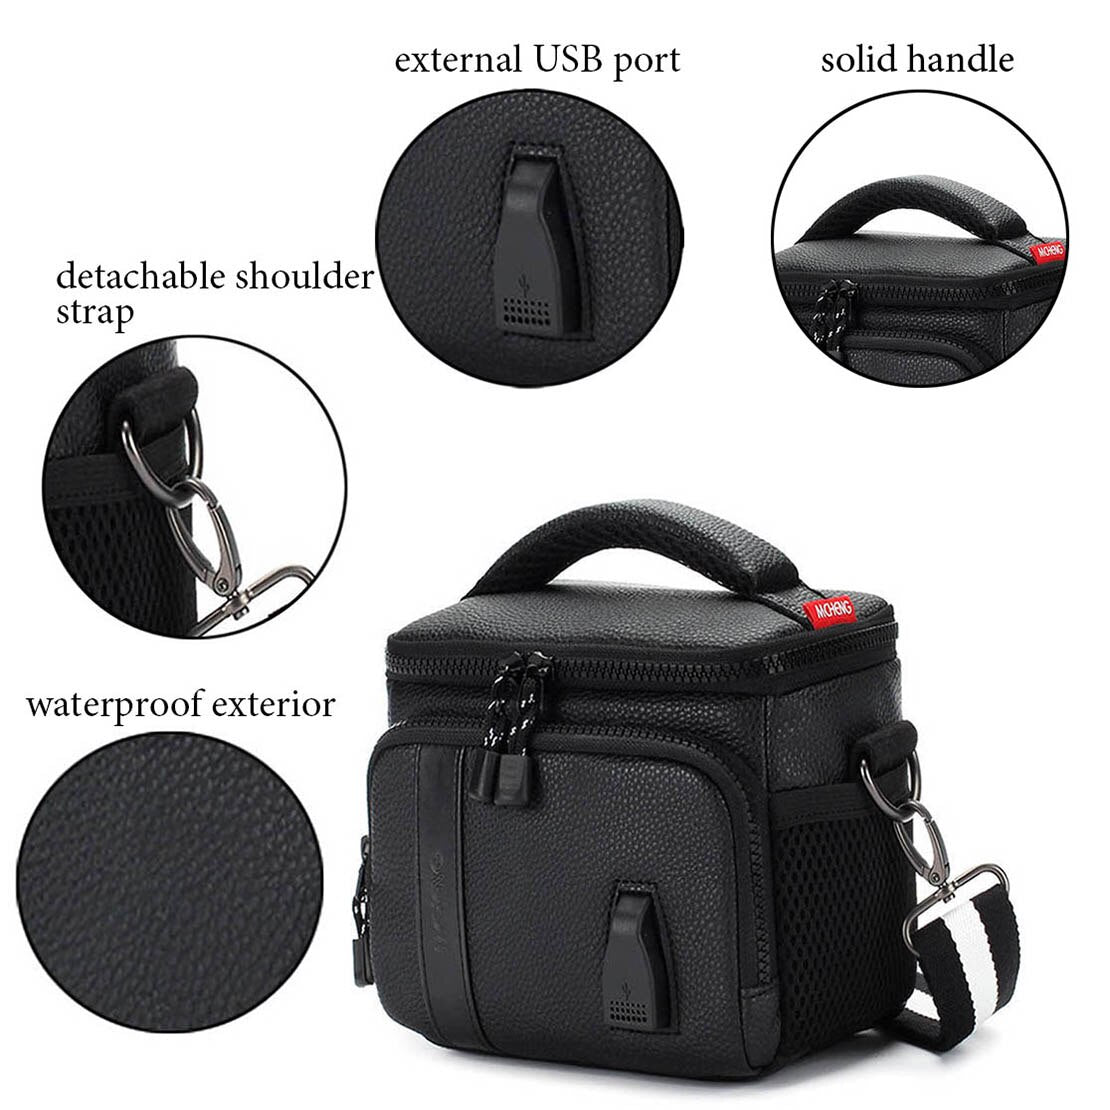 MCHENG Shock Resistant Camera Bag with Convenient USB Charging Port Crossbody Digital Camera Case